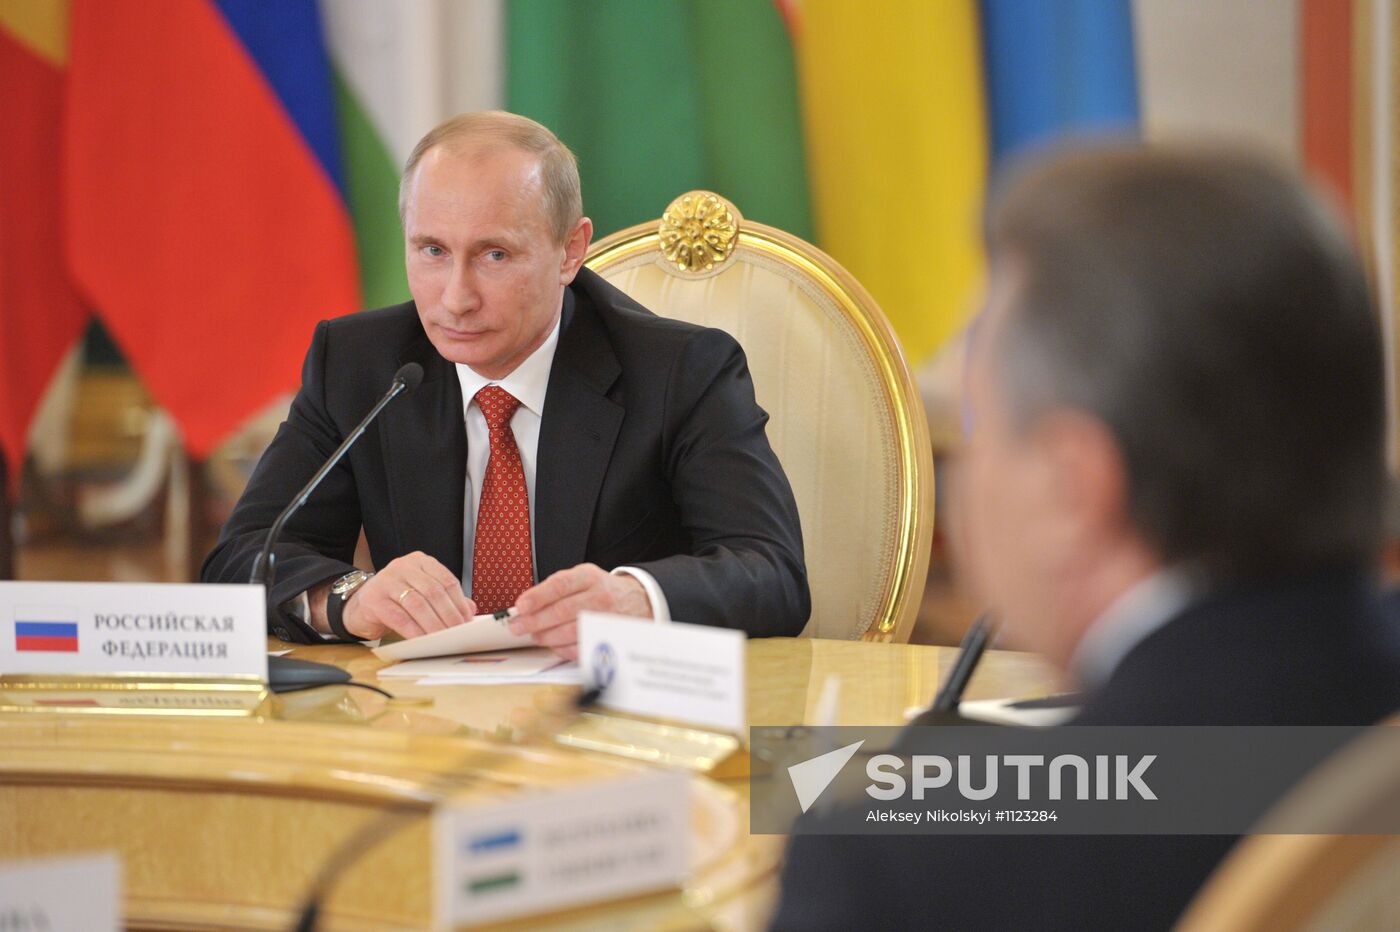 CIS informal summitn in Kremlin